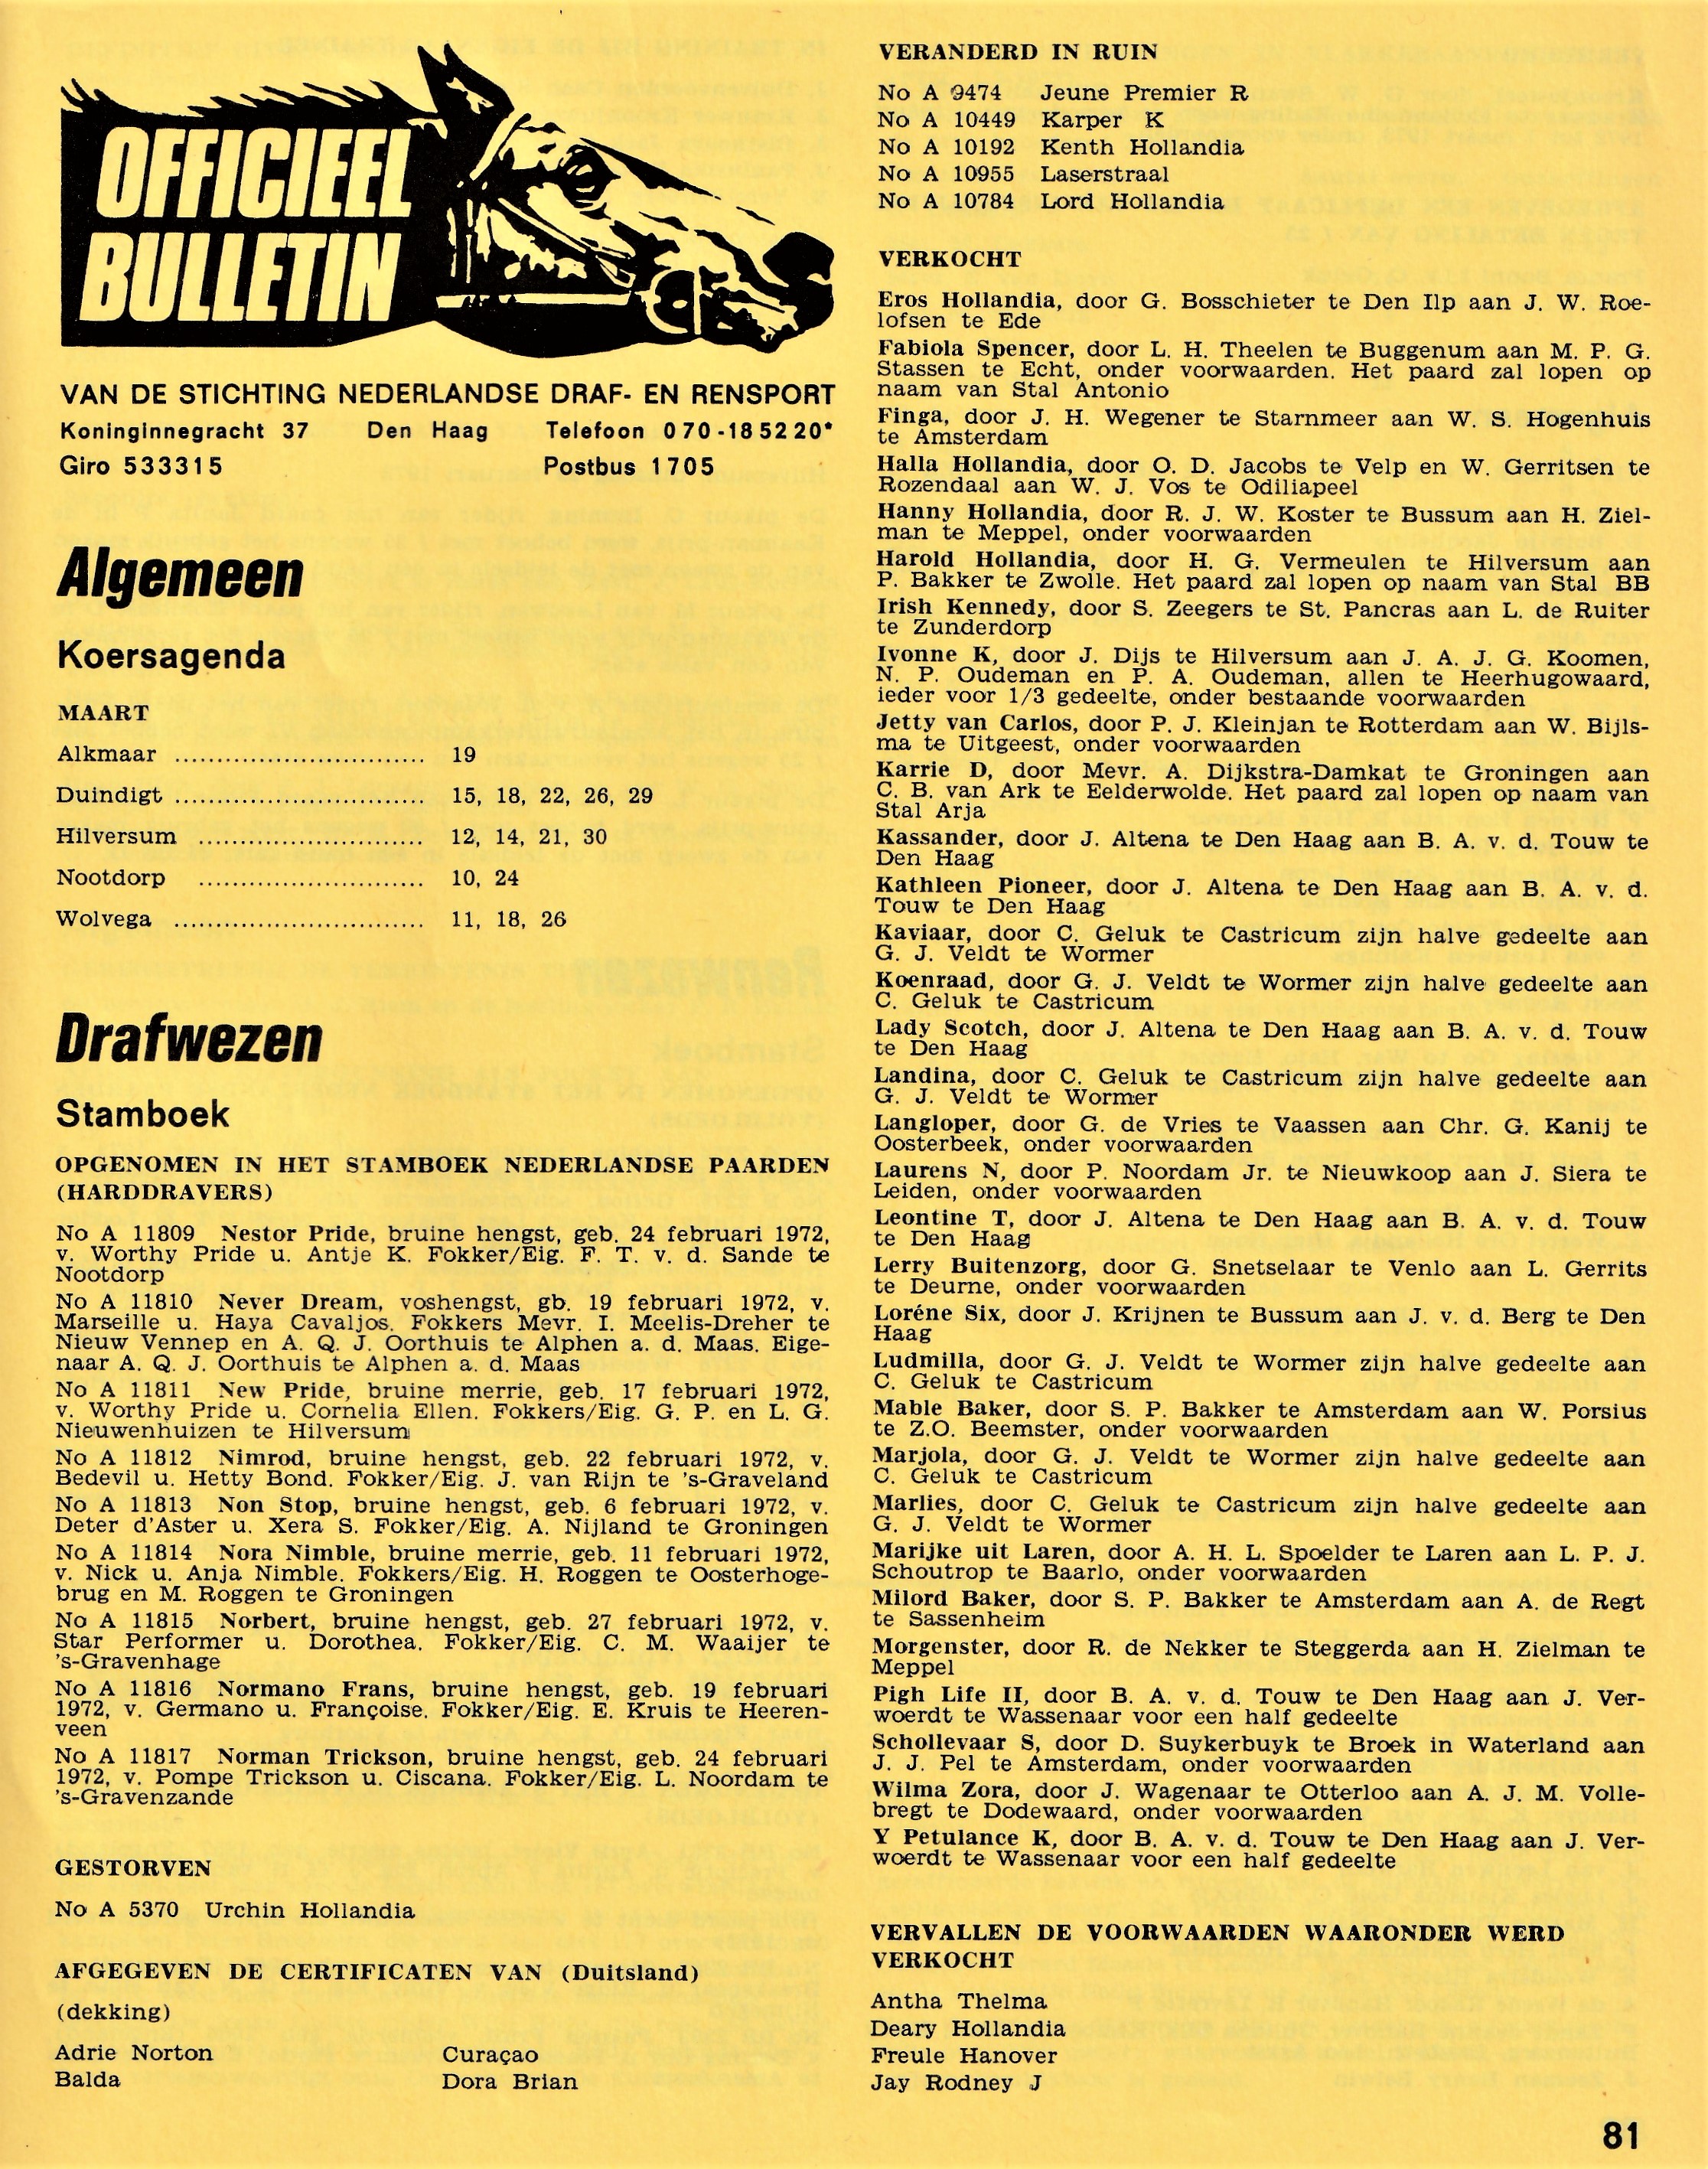 16 Mrt 1Officieel Bulletin 10 1972.jpg